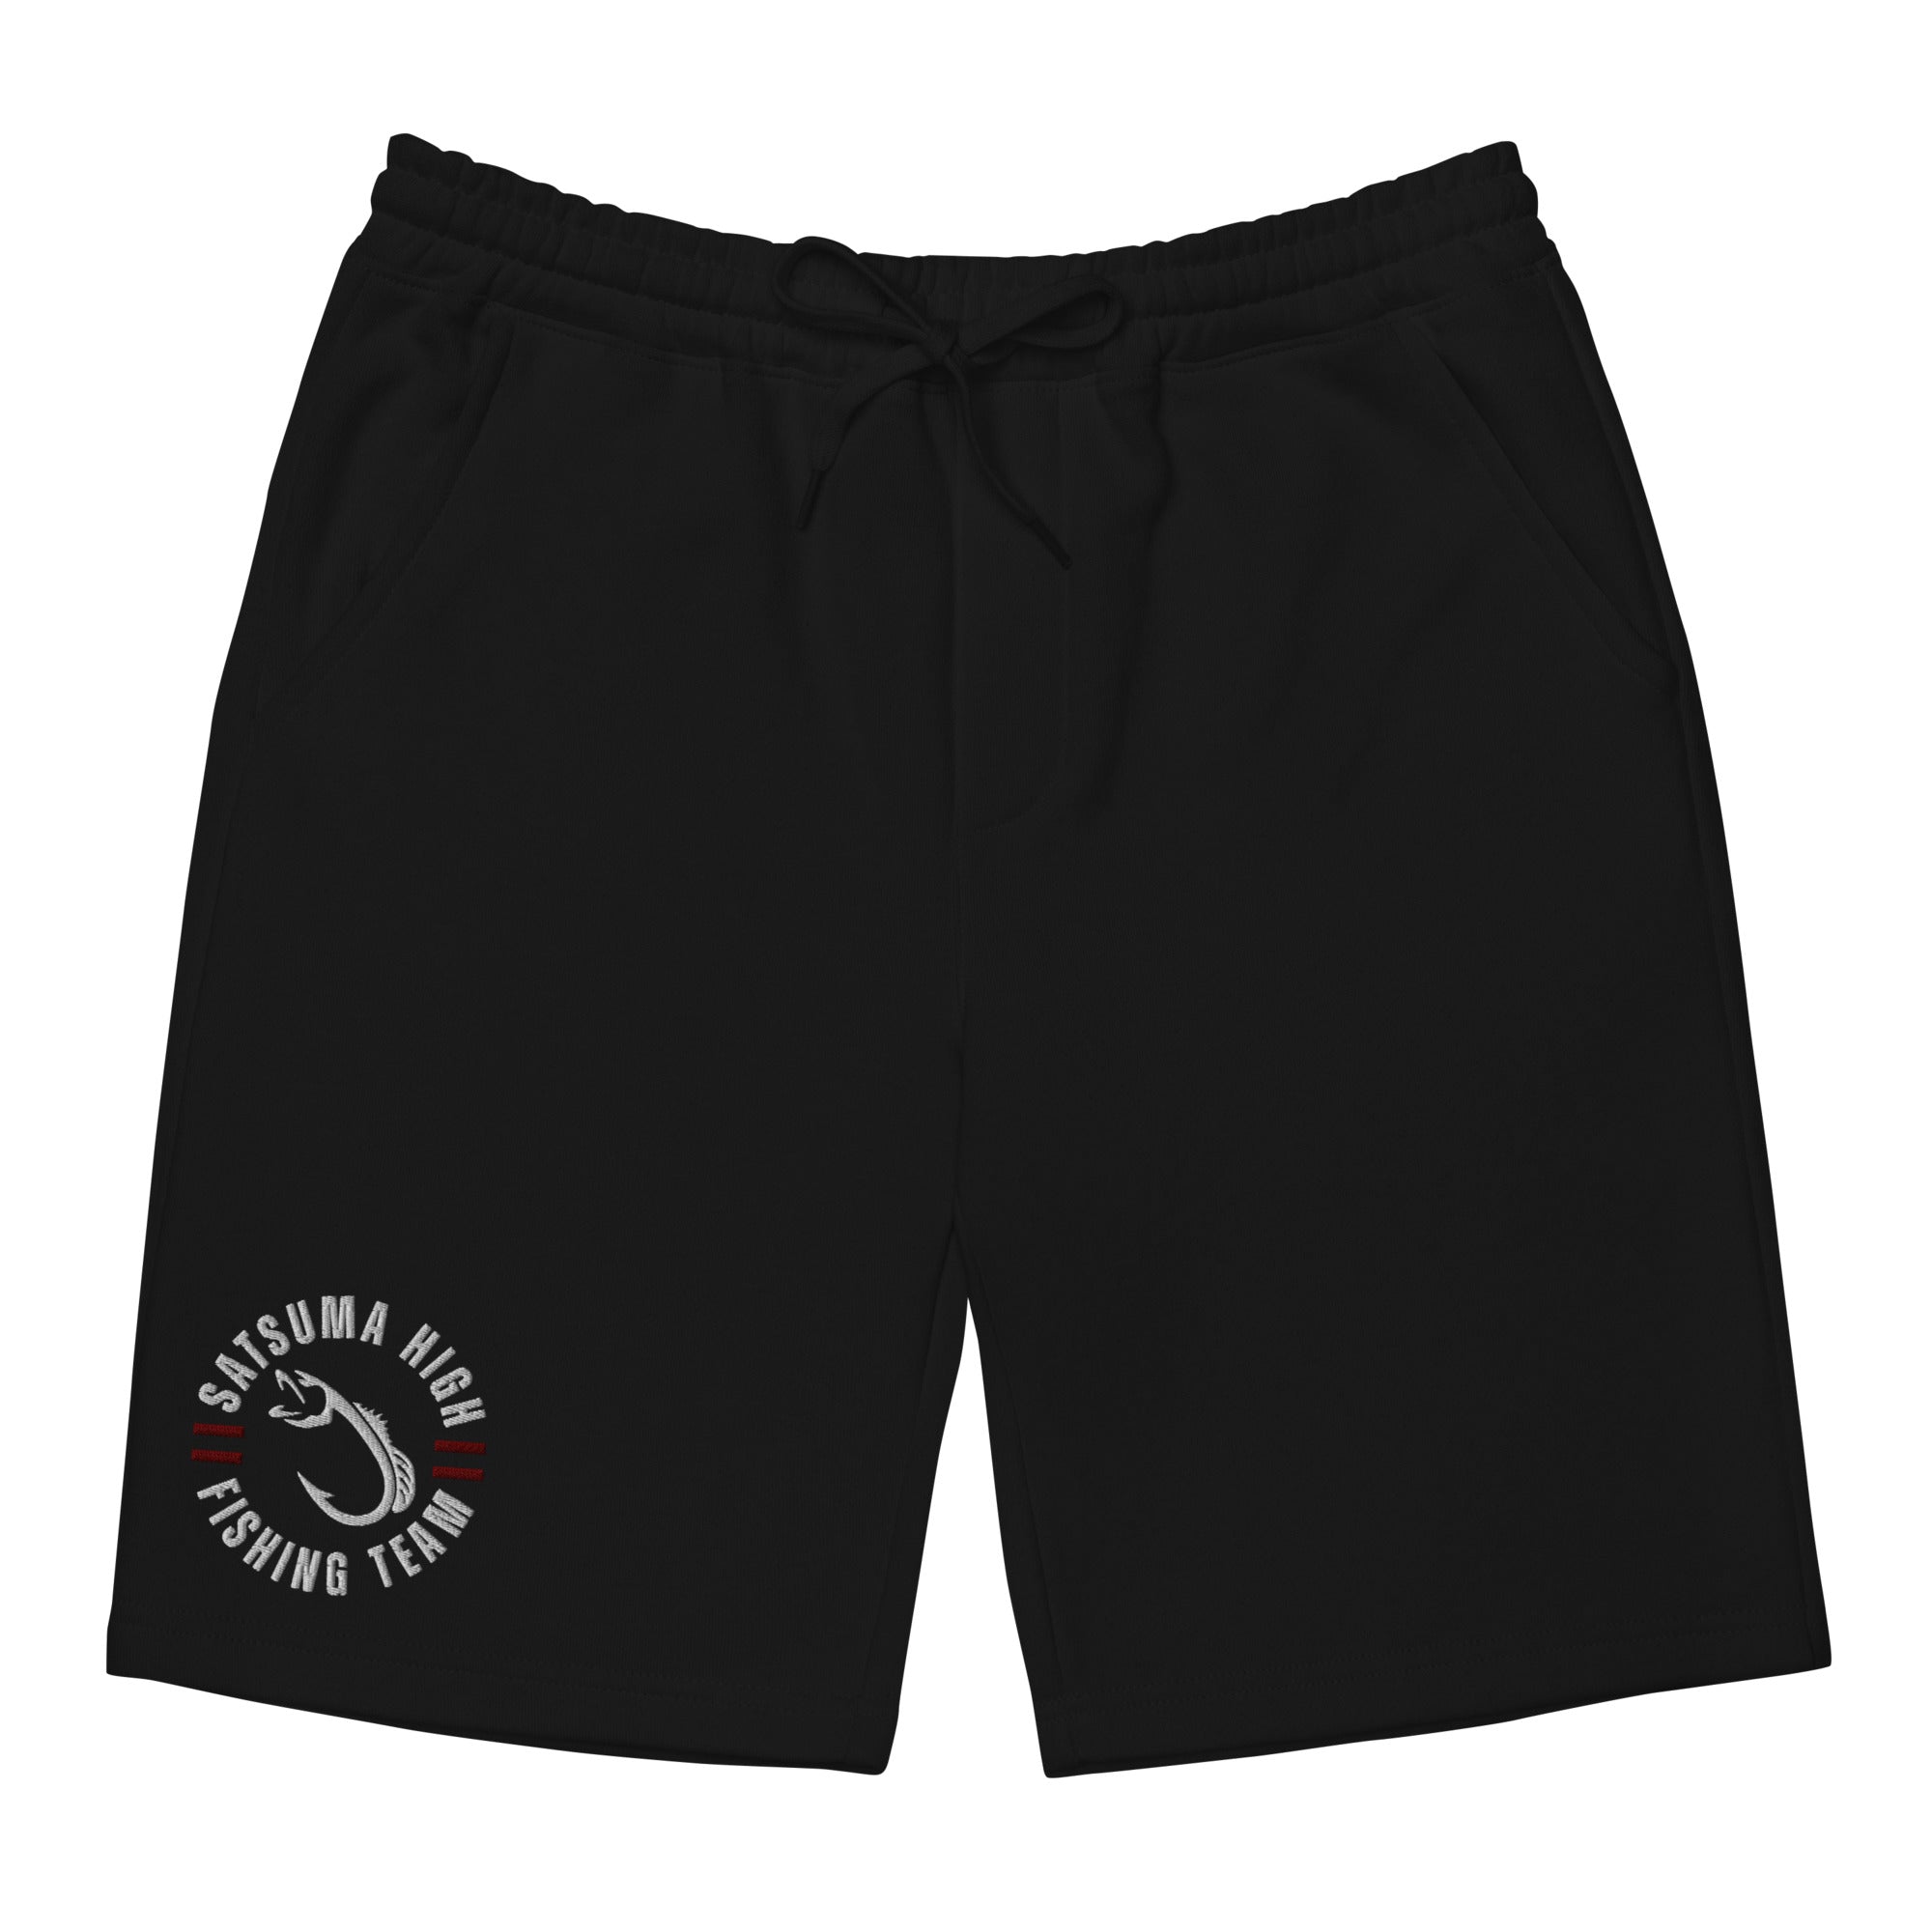 Satsuma Fishing Team Men's fleece shorts